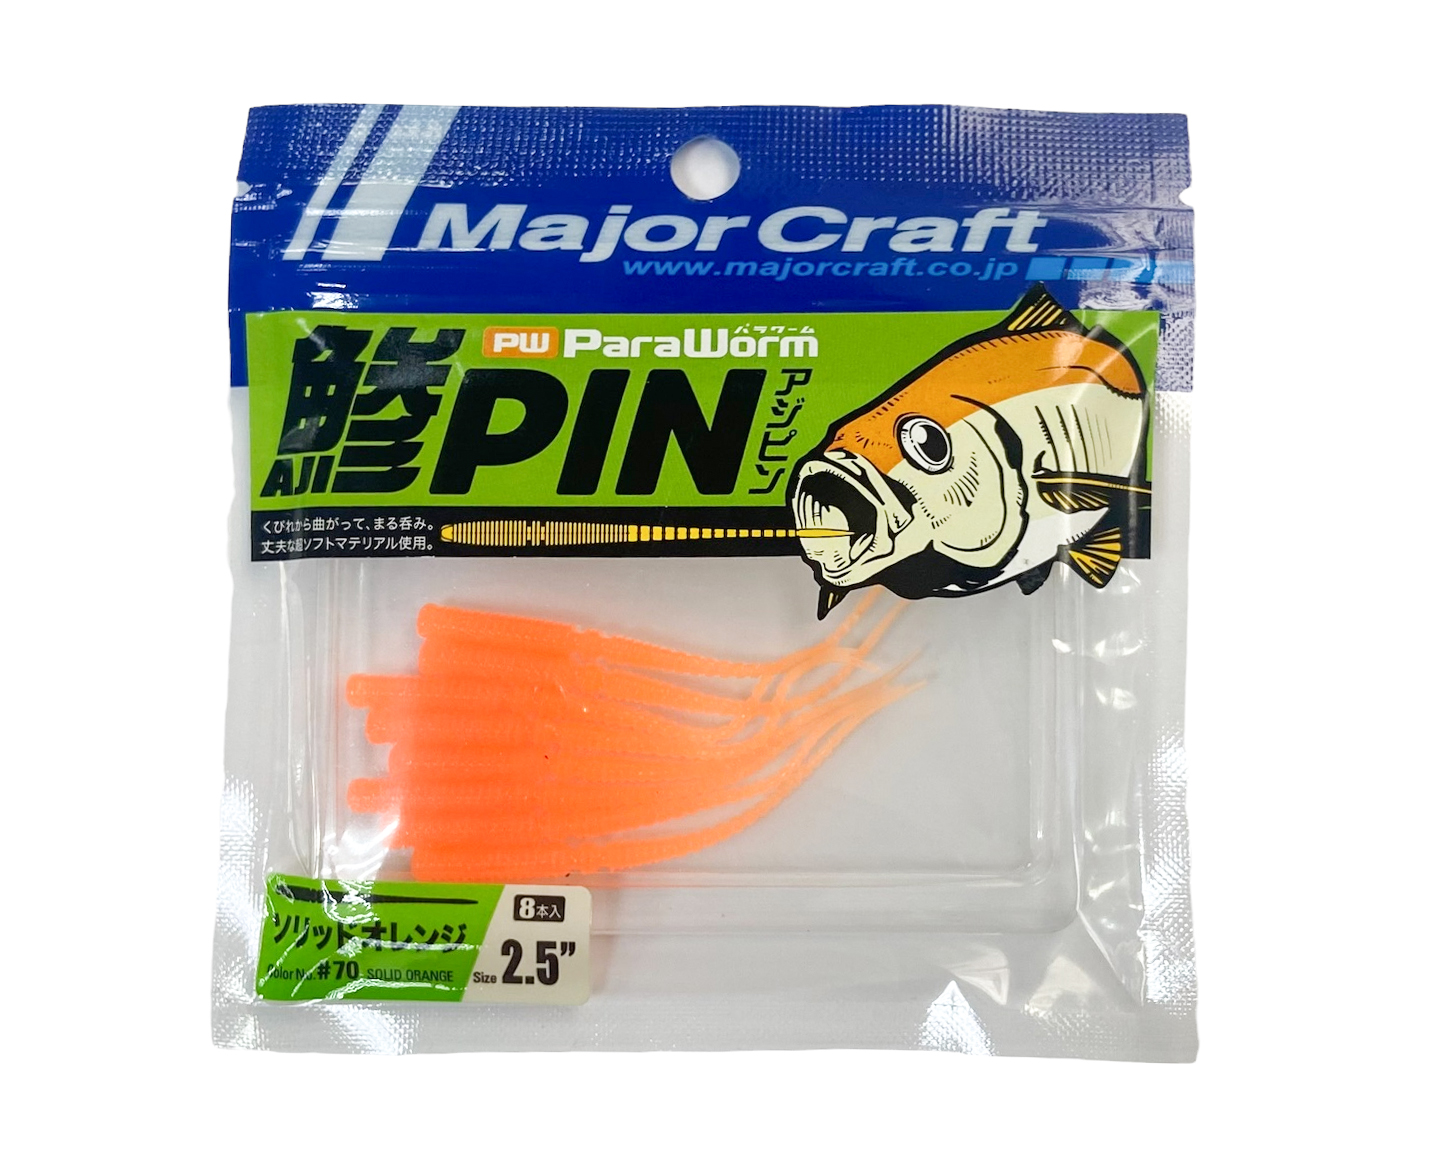 Приманка Major Craft PW Aji pin 2,5' цв.070 Solid orange - фото 1